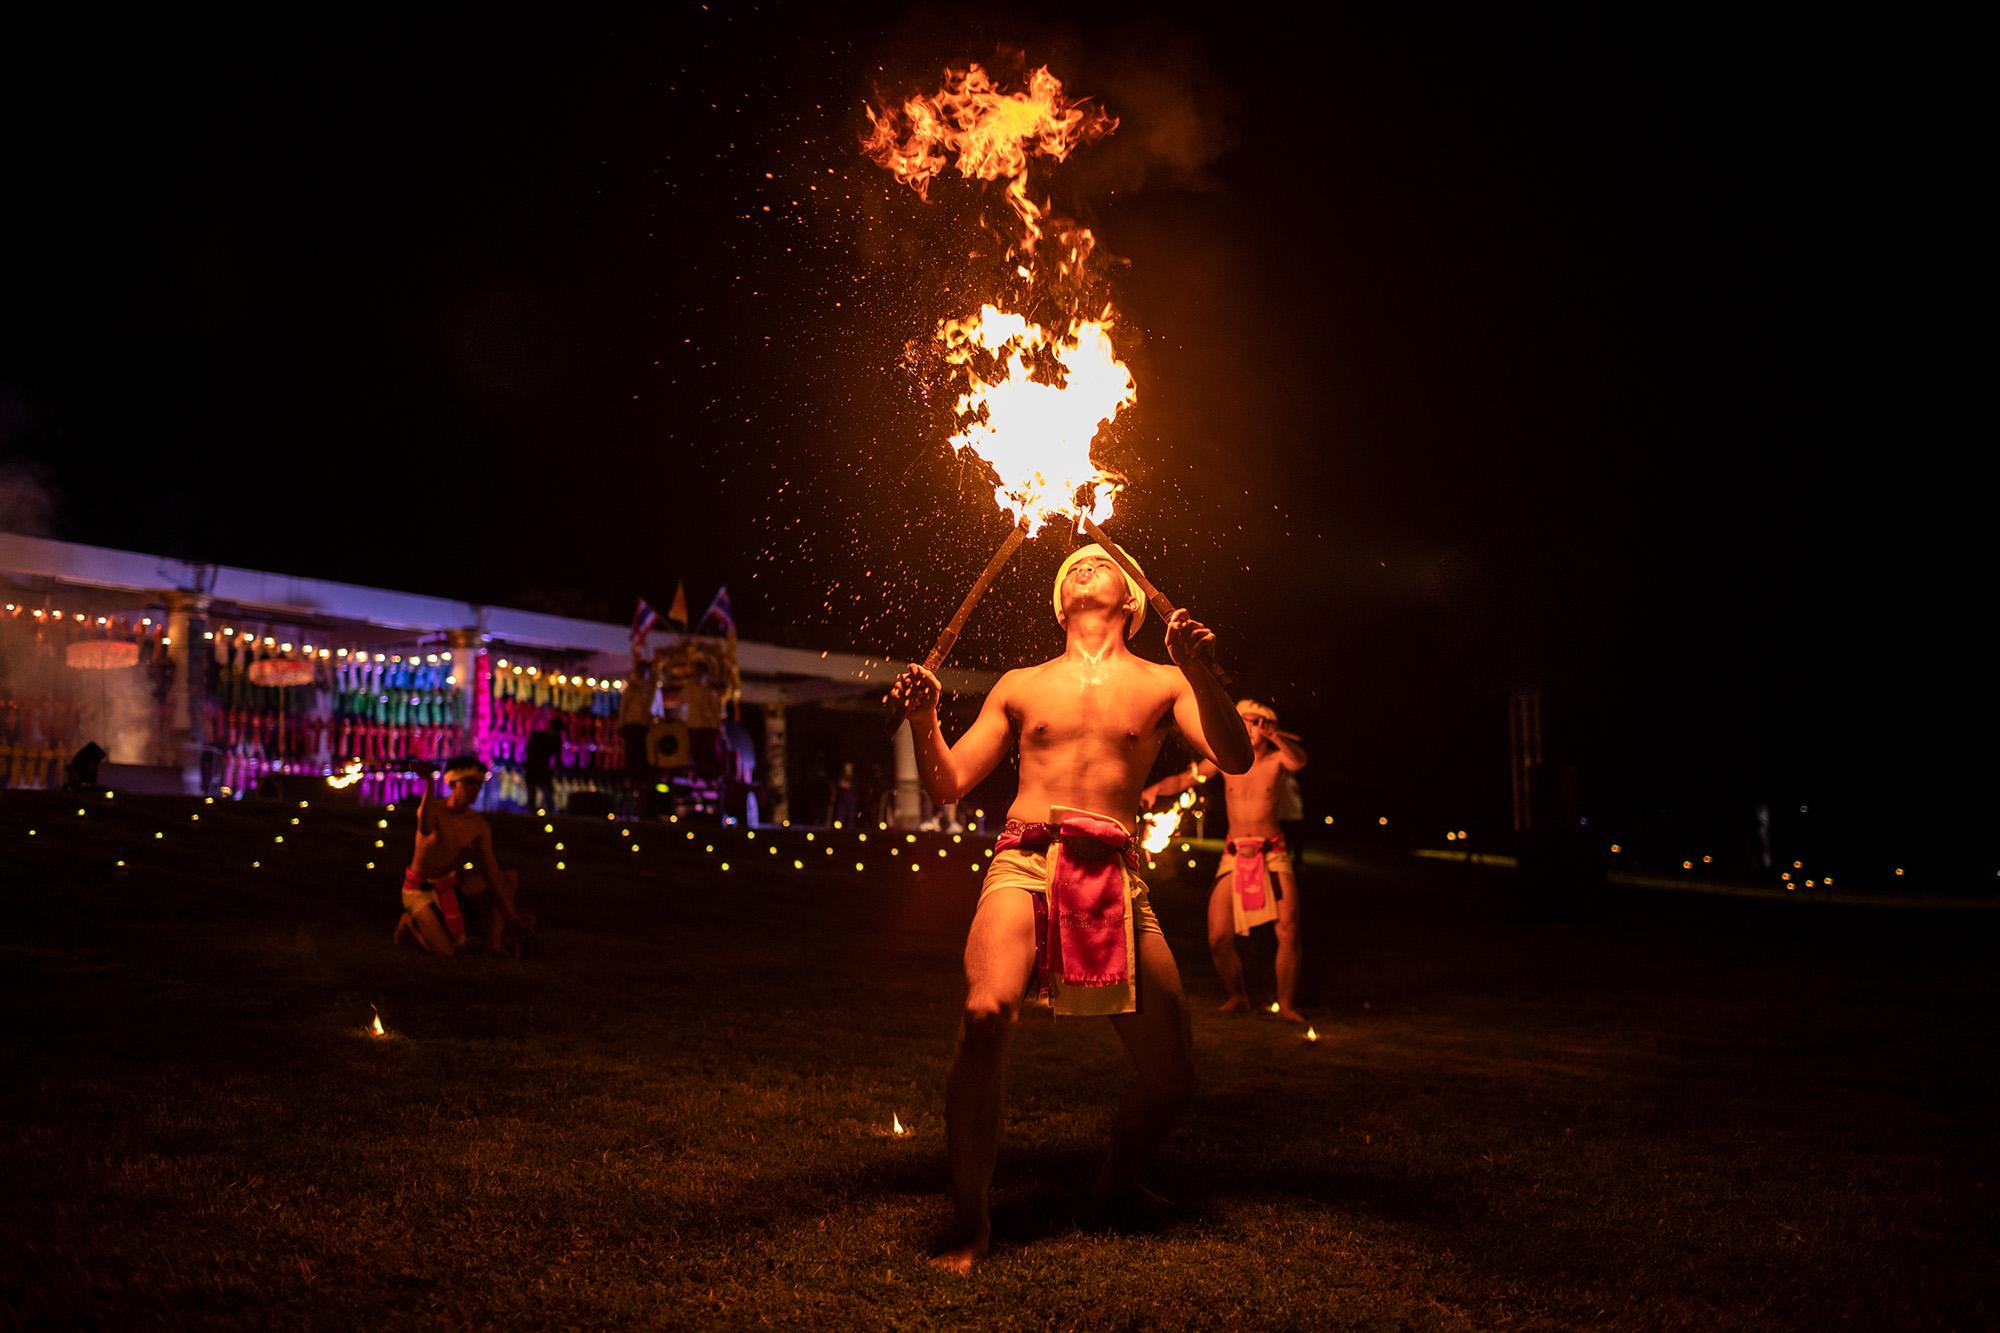 A fire dancer performs at an event near Chiang Mai, Thailand, November 2021.